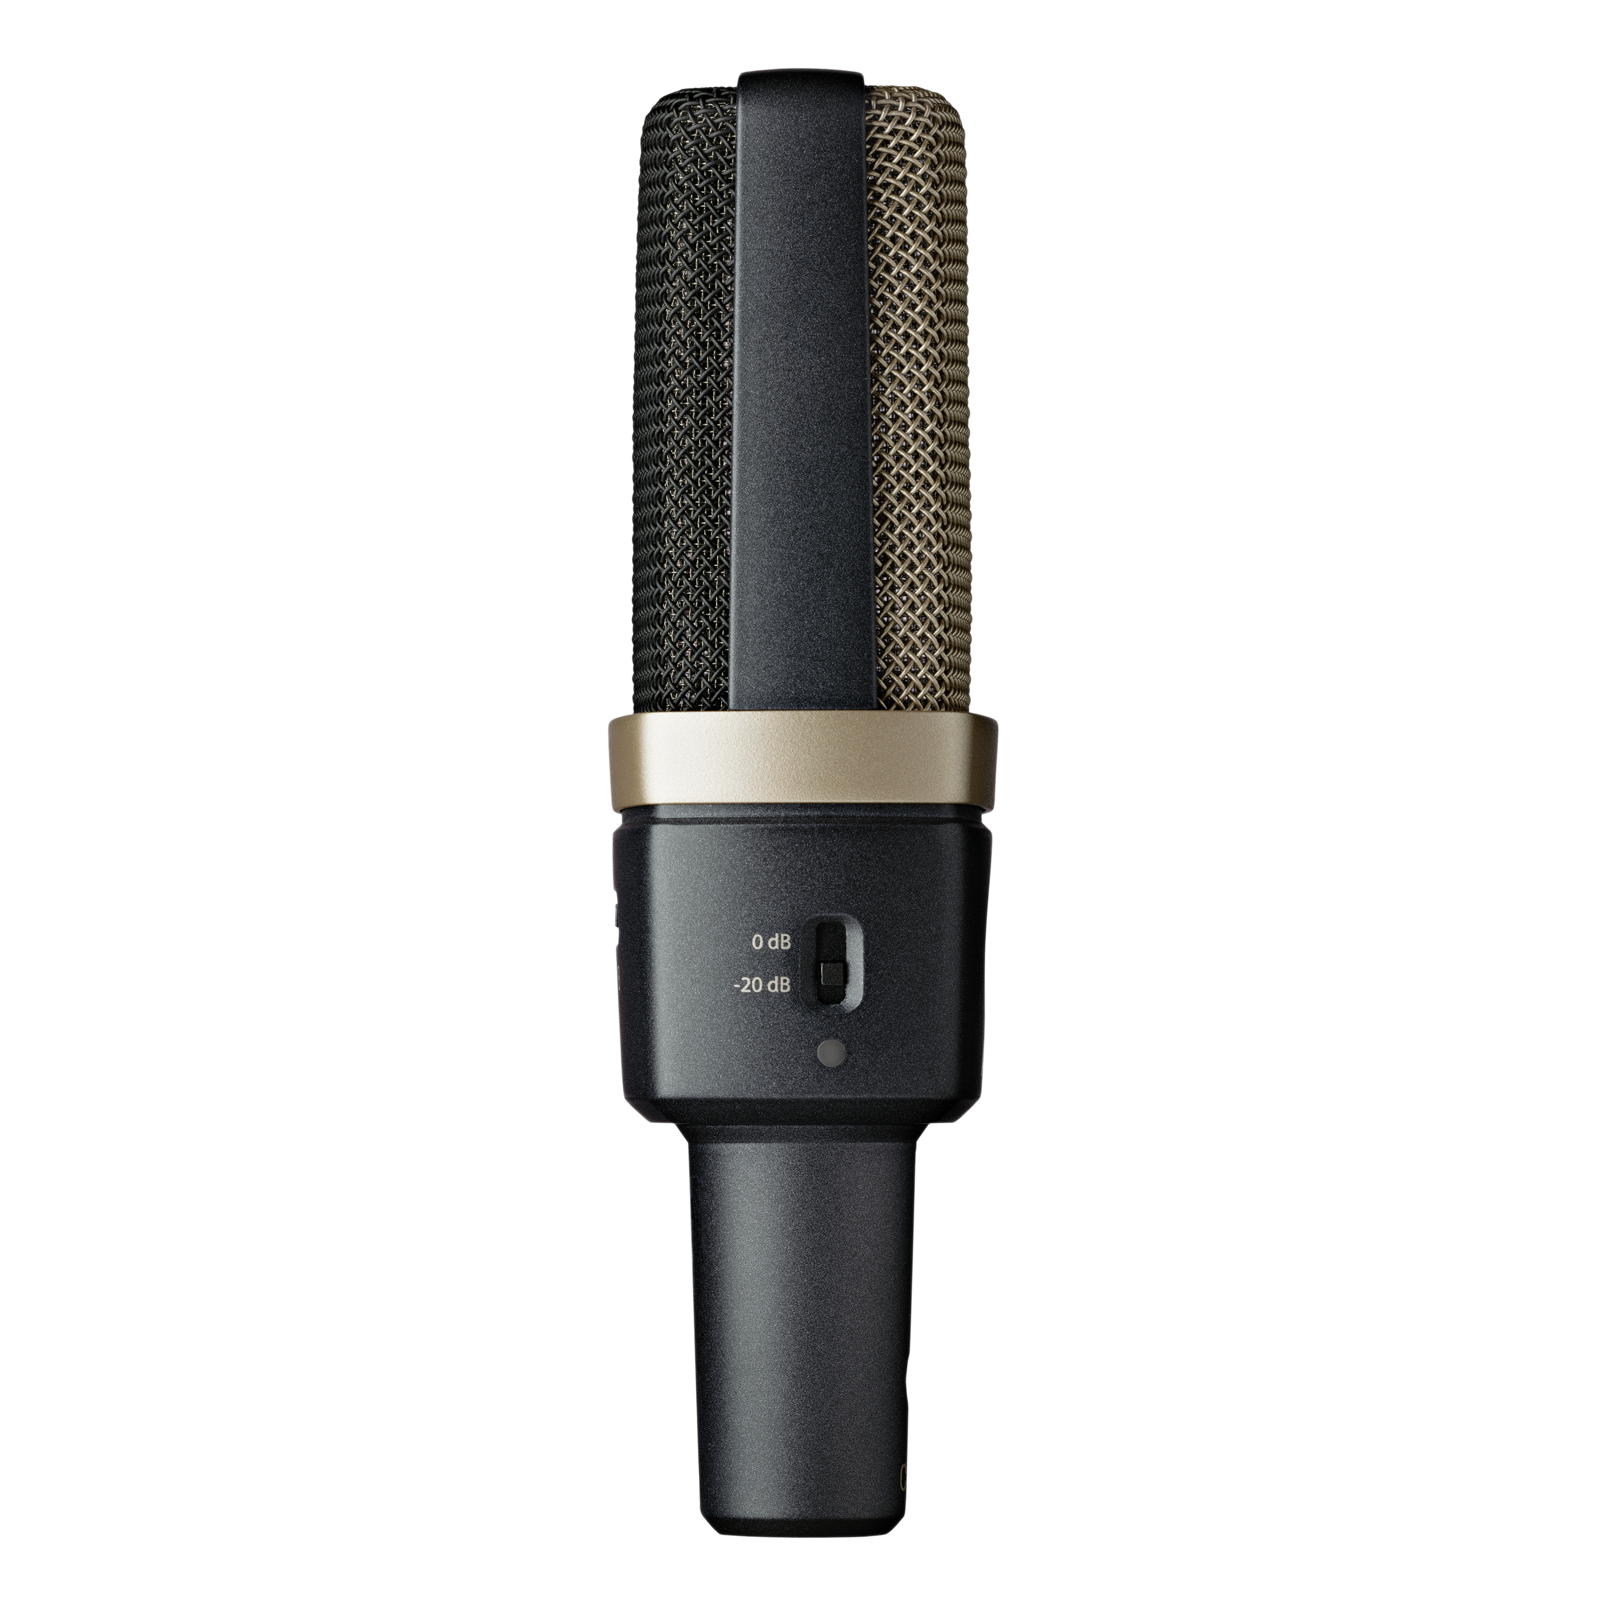 C314 (B-Stock) - Black - Professional multi-pattern condenser microphone - Left